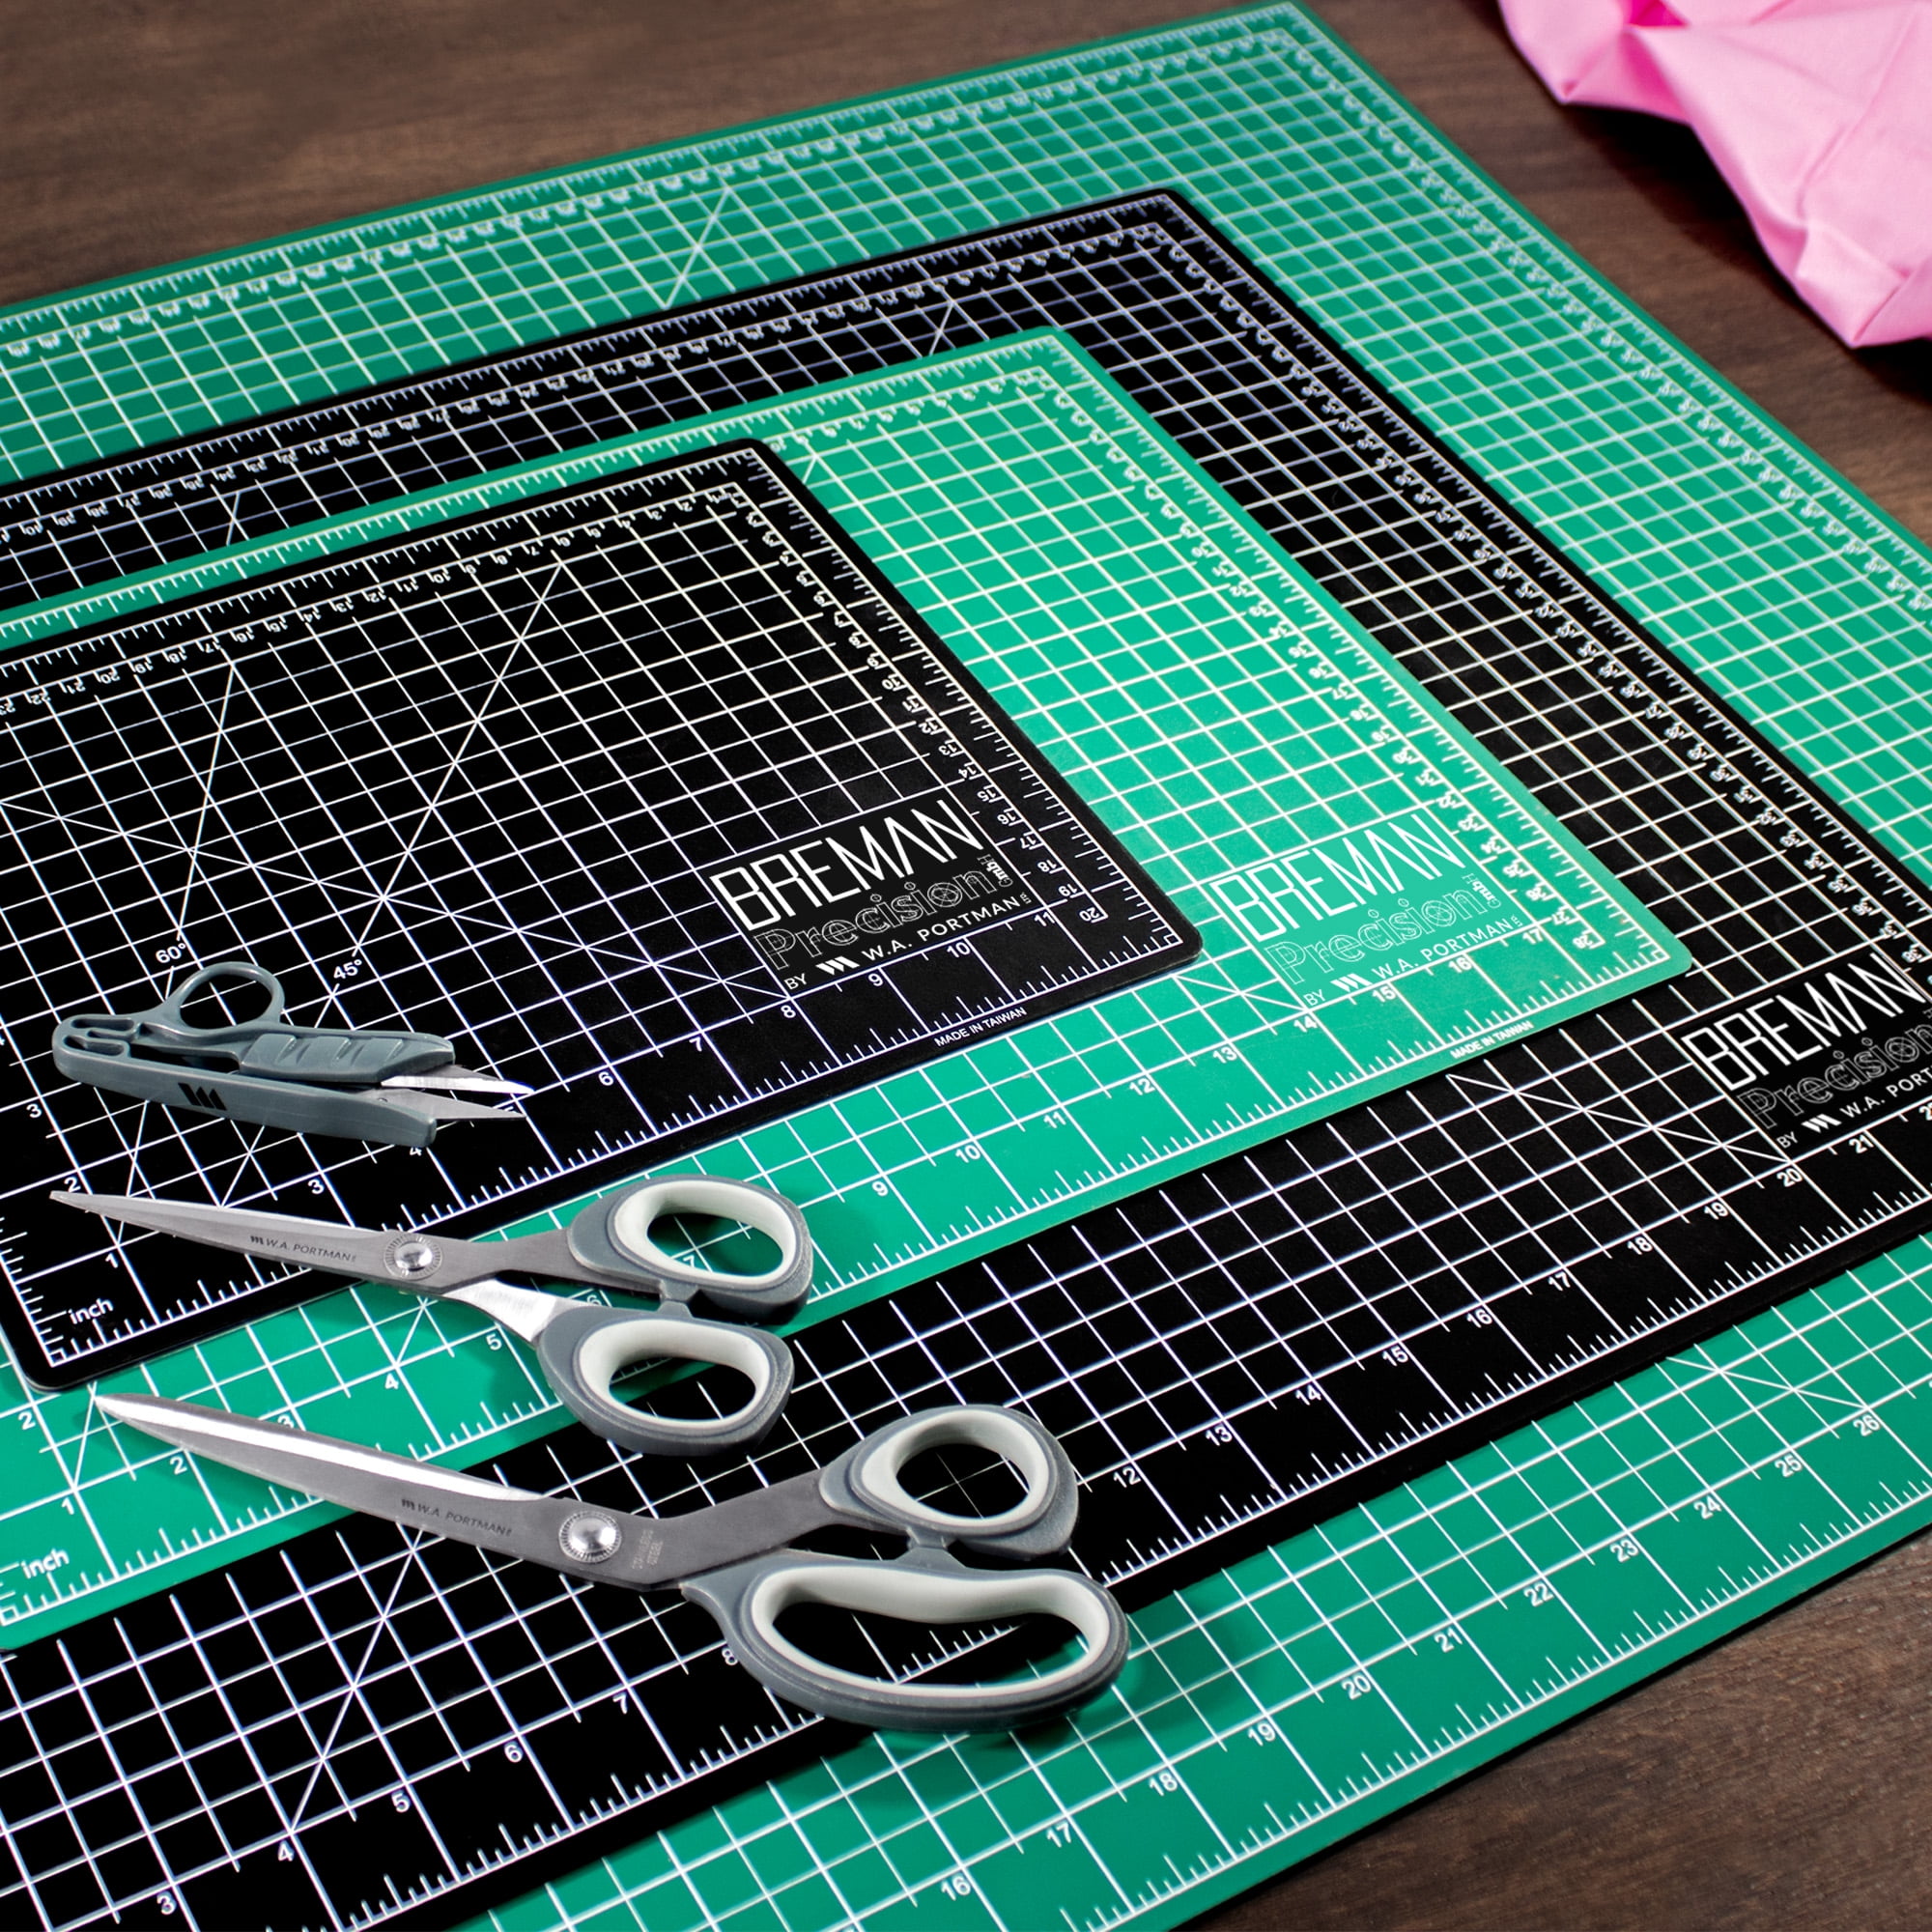  WA Portman 3 Pc Fabric Scissor Set - 3 Pack Sewing Scissors for  Fabric Cutting - 1 Pair Large Fabric Scissors - 1 Pair Medium Fabric Shears  - 1 Pair Thread